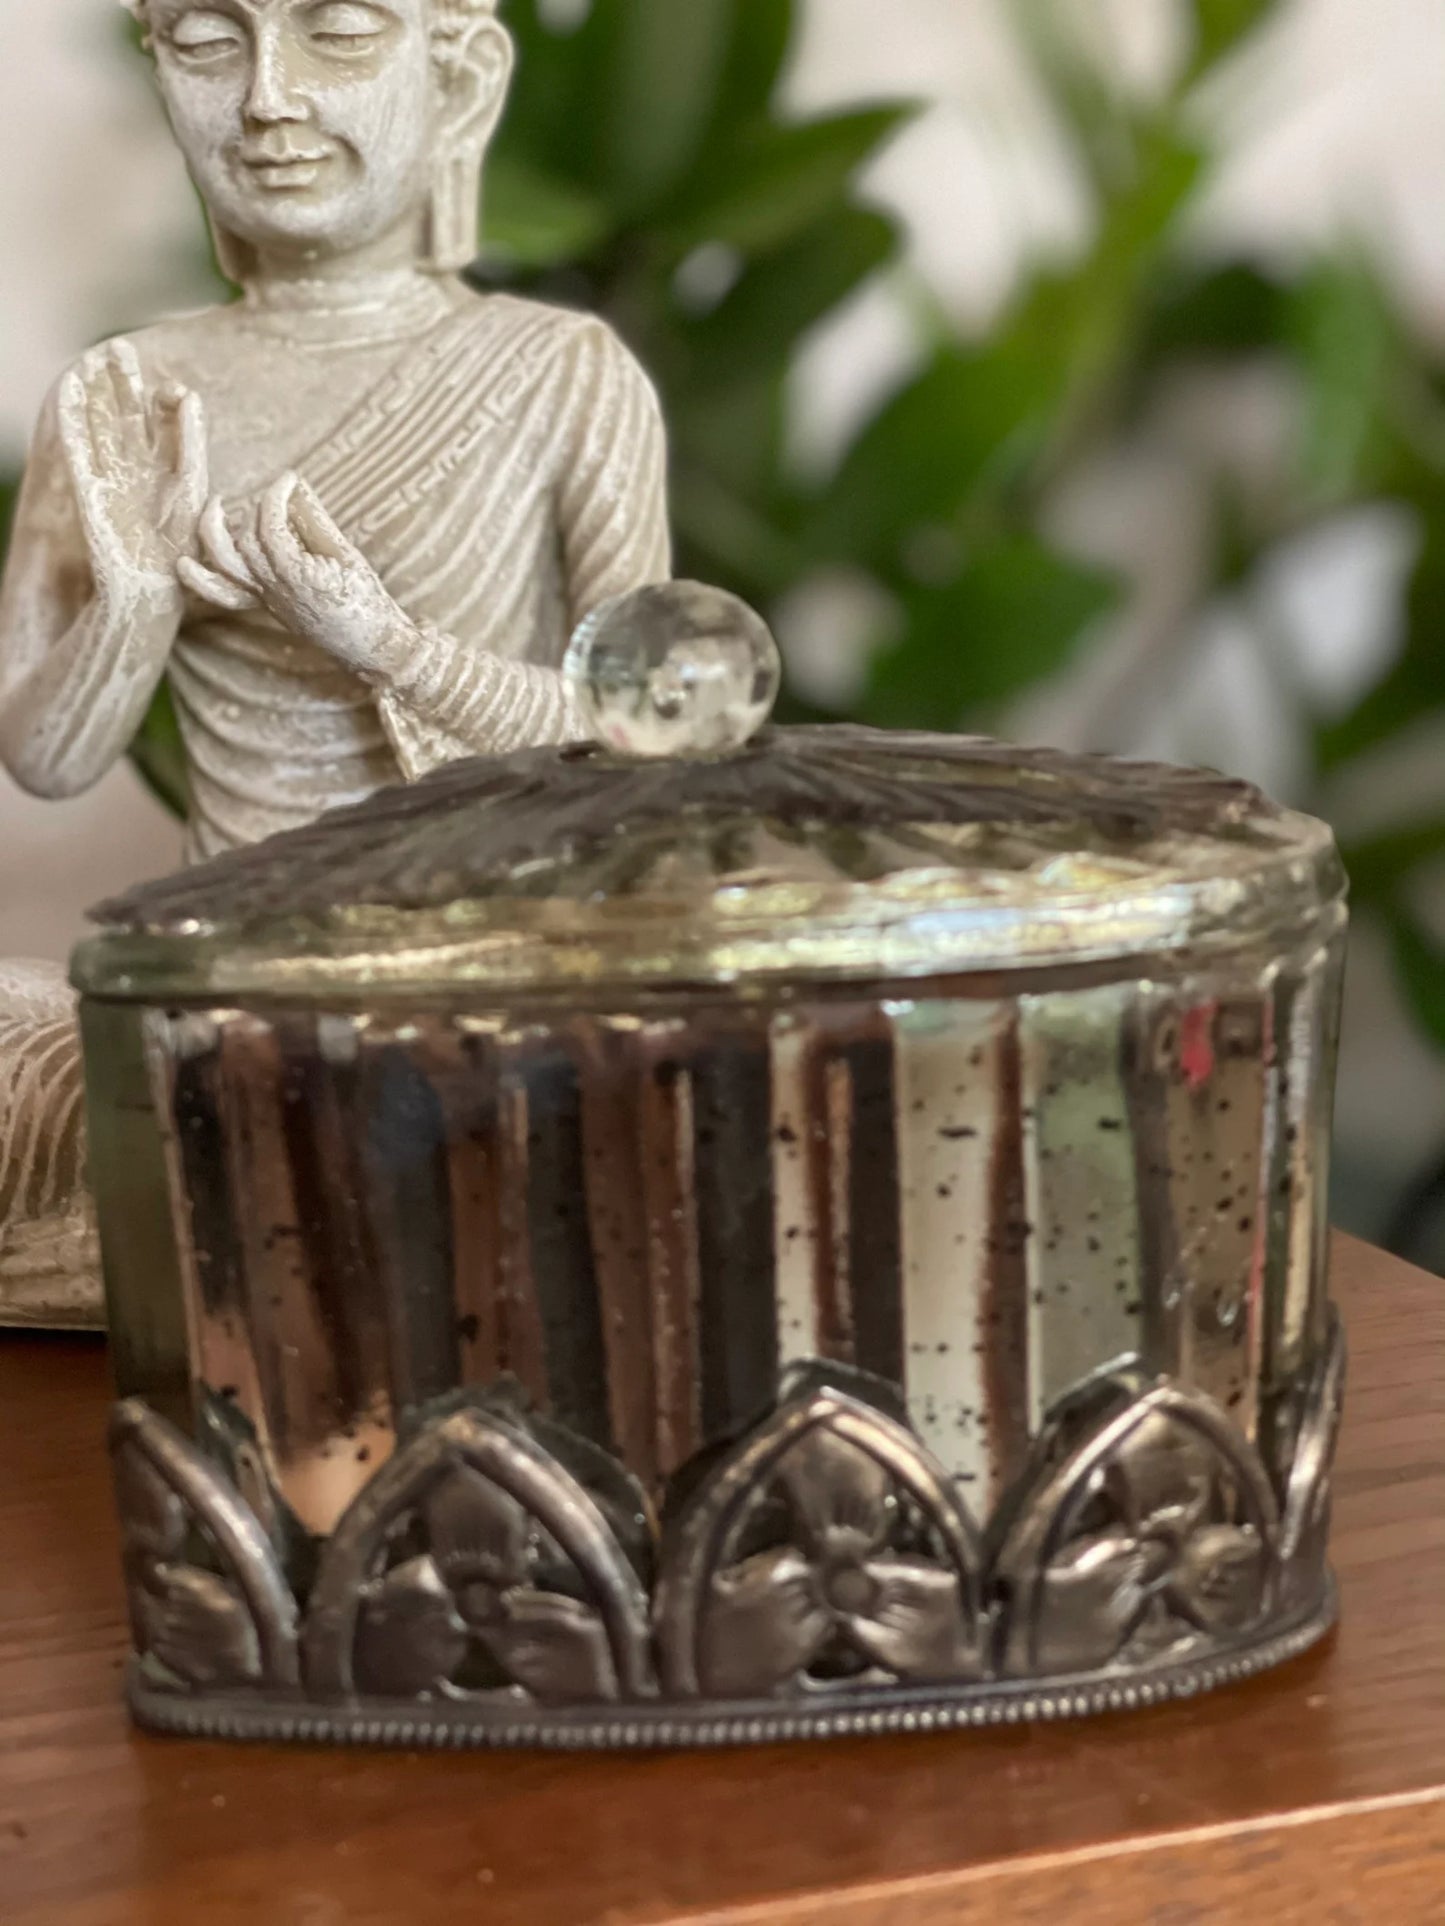 Vintage Glam, Vintage Glass and Metal Heart Trinket Box, Bodhi Vintage